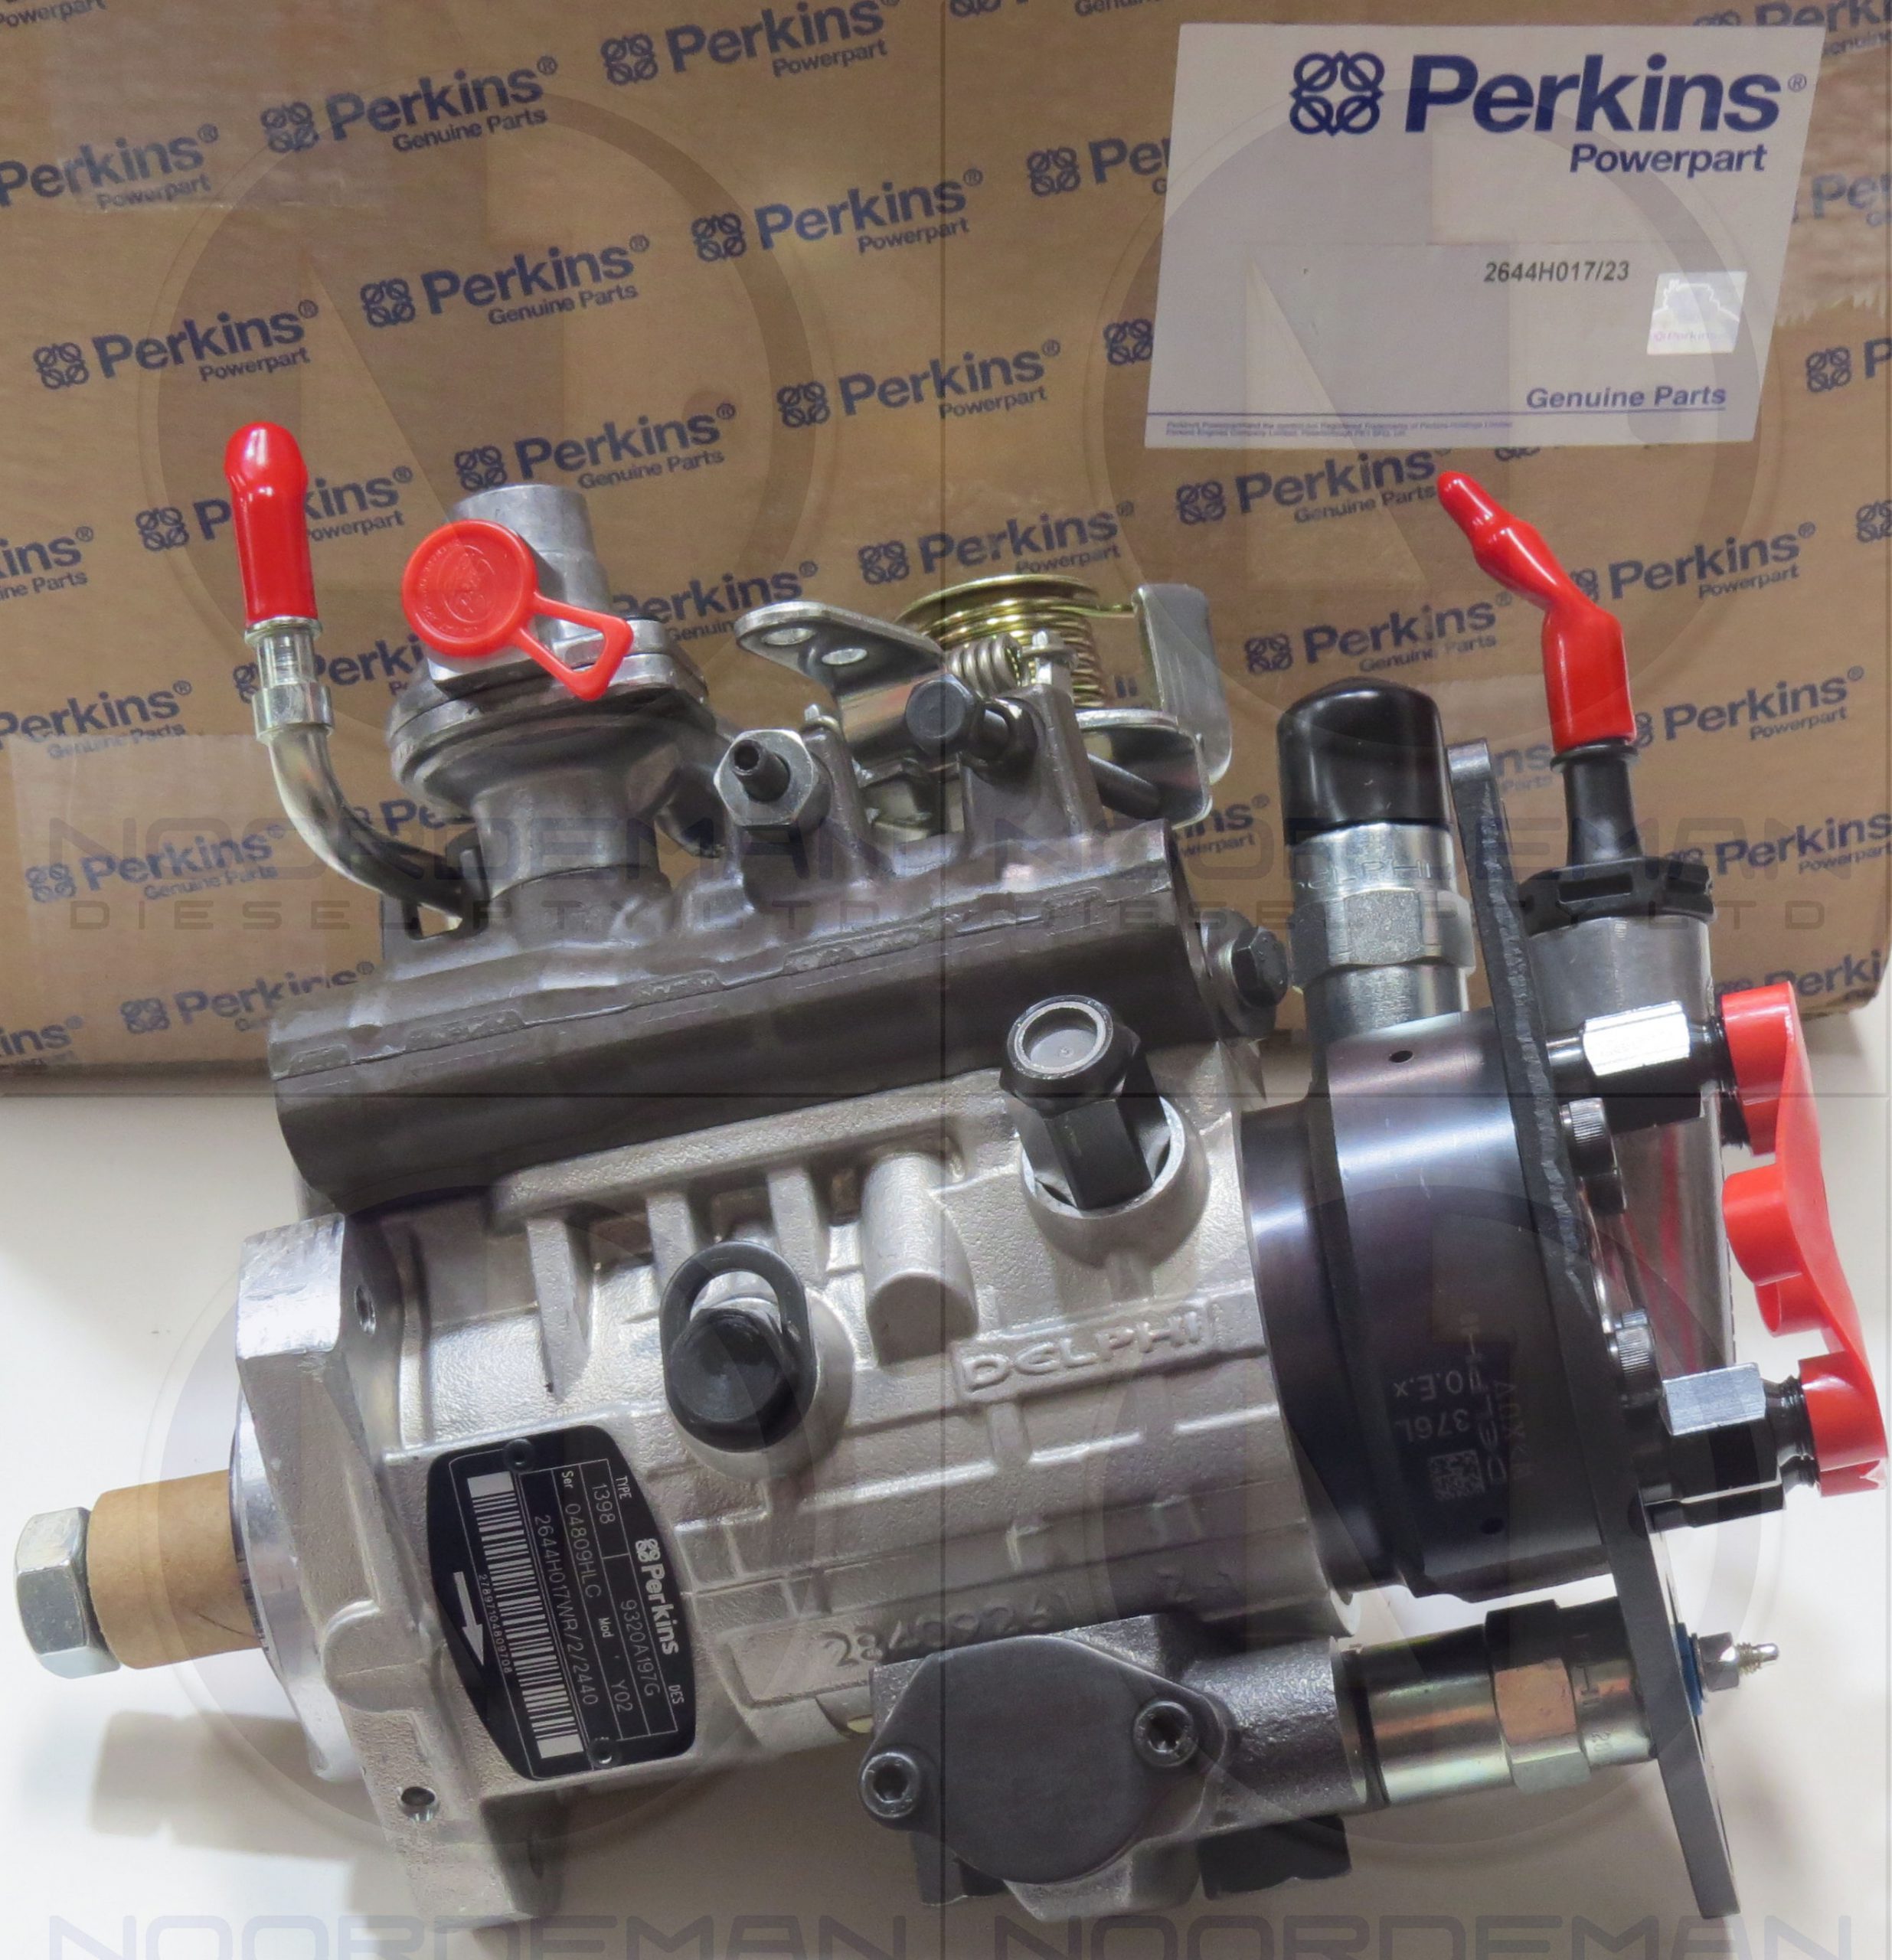 2644H017/23 Perkins Fuel Injection Pump